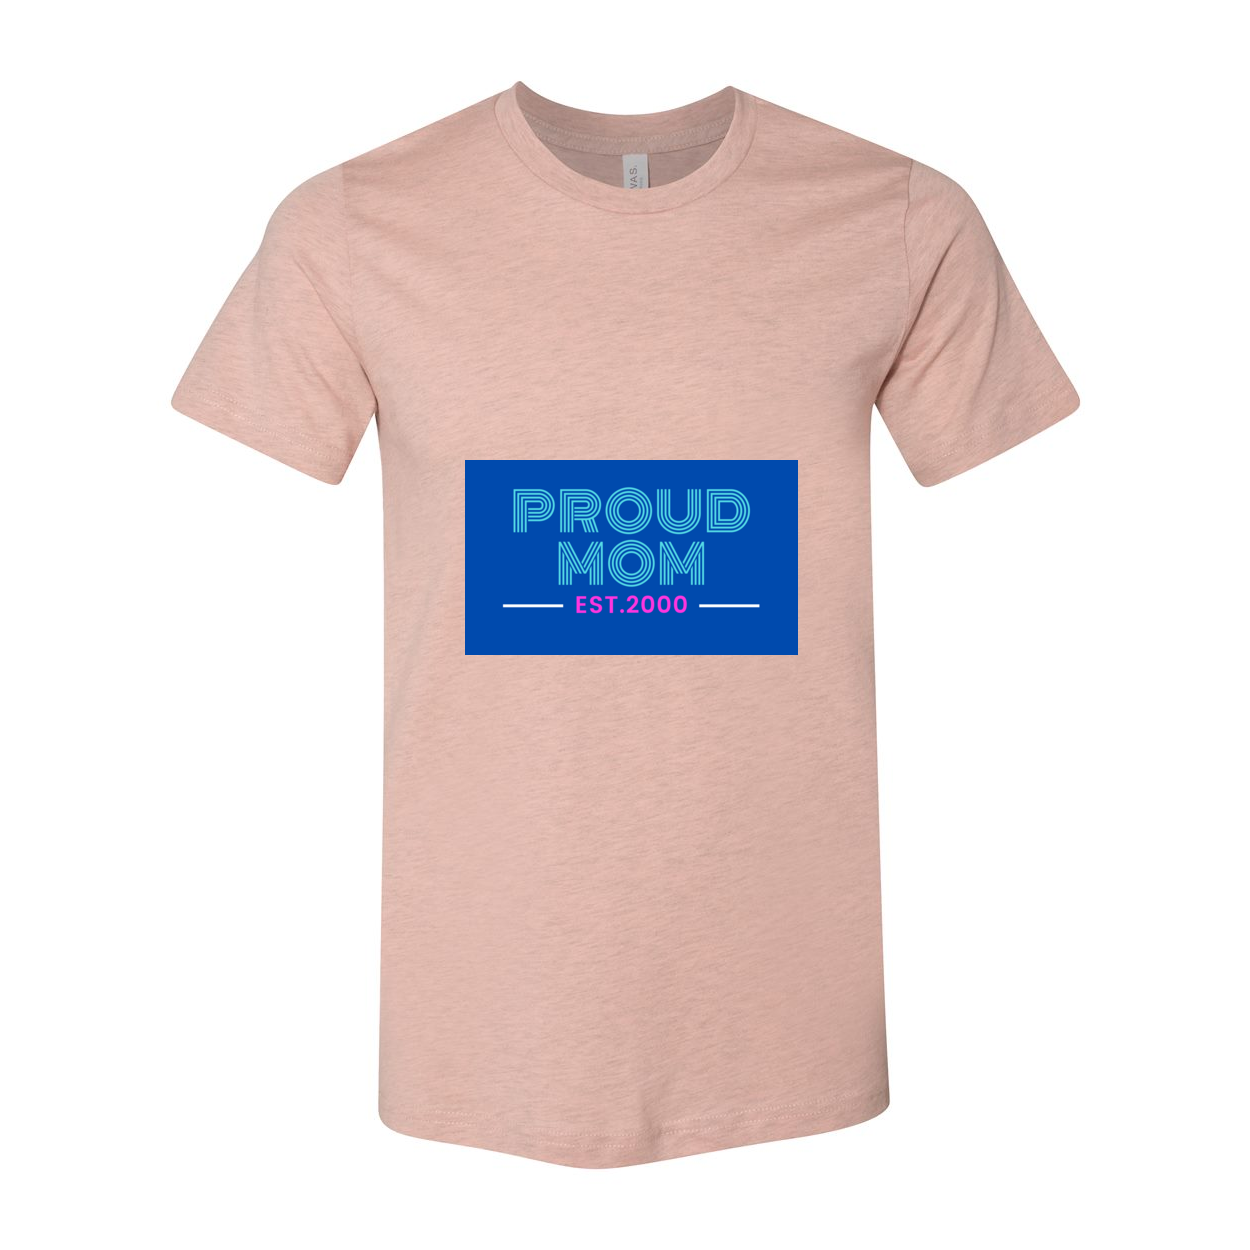 Proud Mom t-shirt